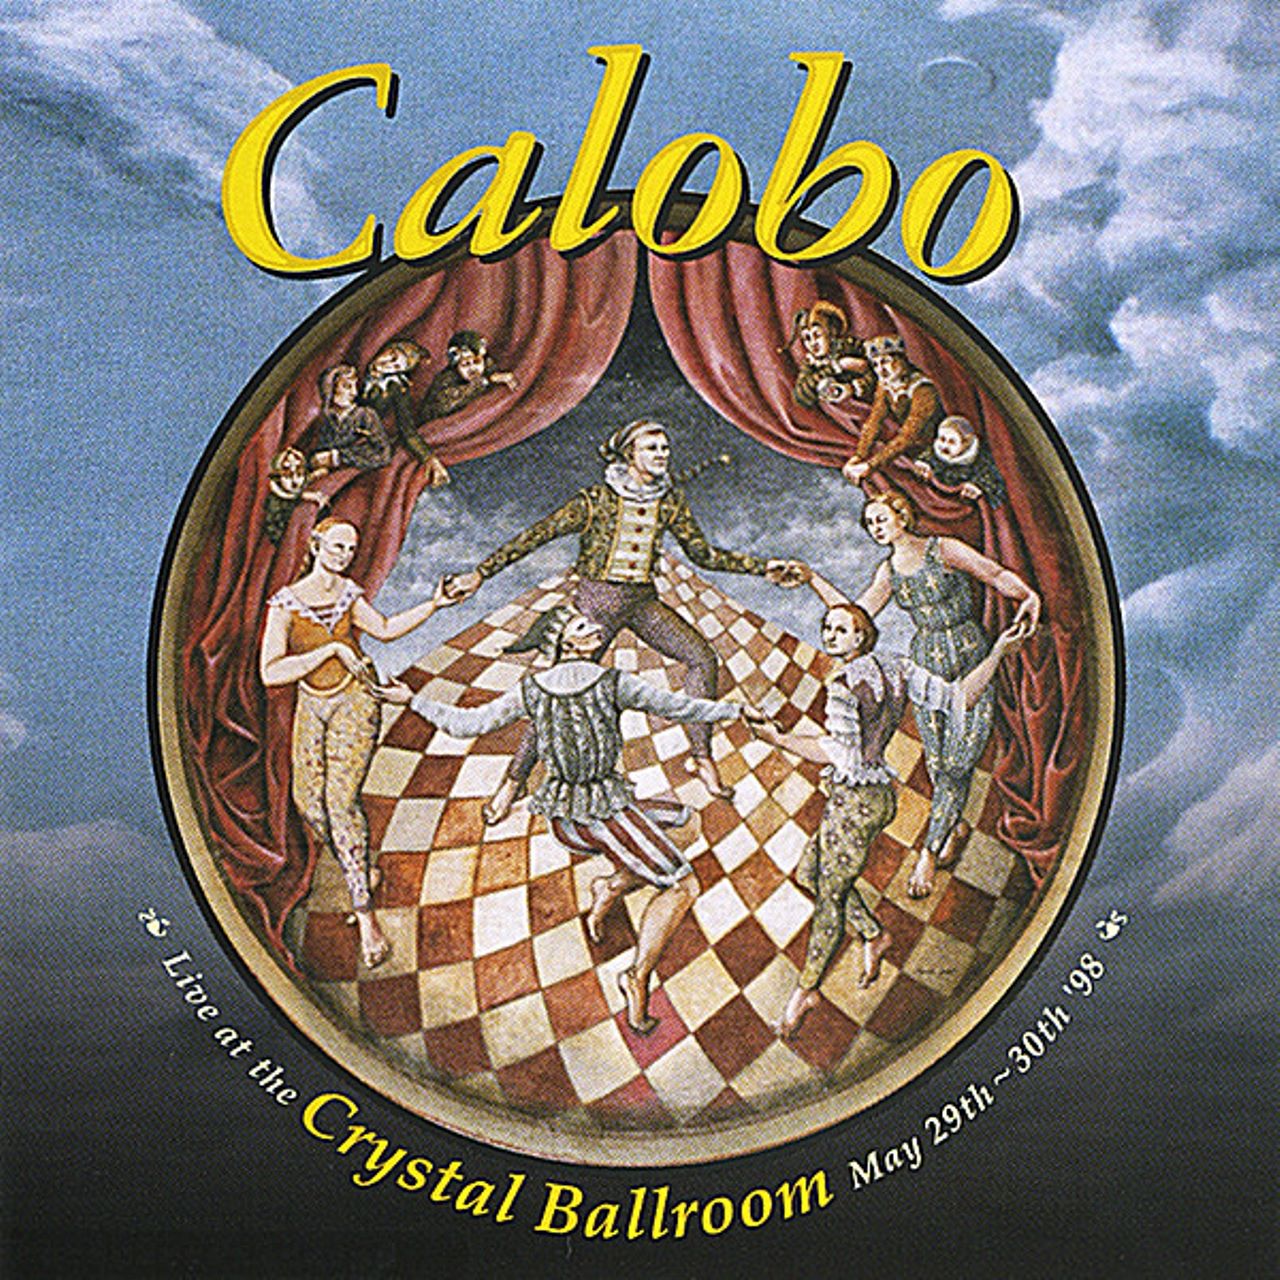 Calobo - Live At The Crystal Ballroom cover album